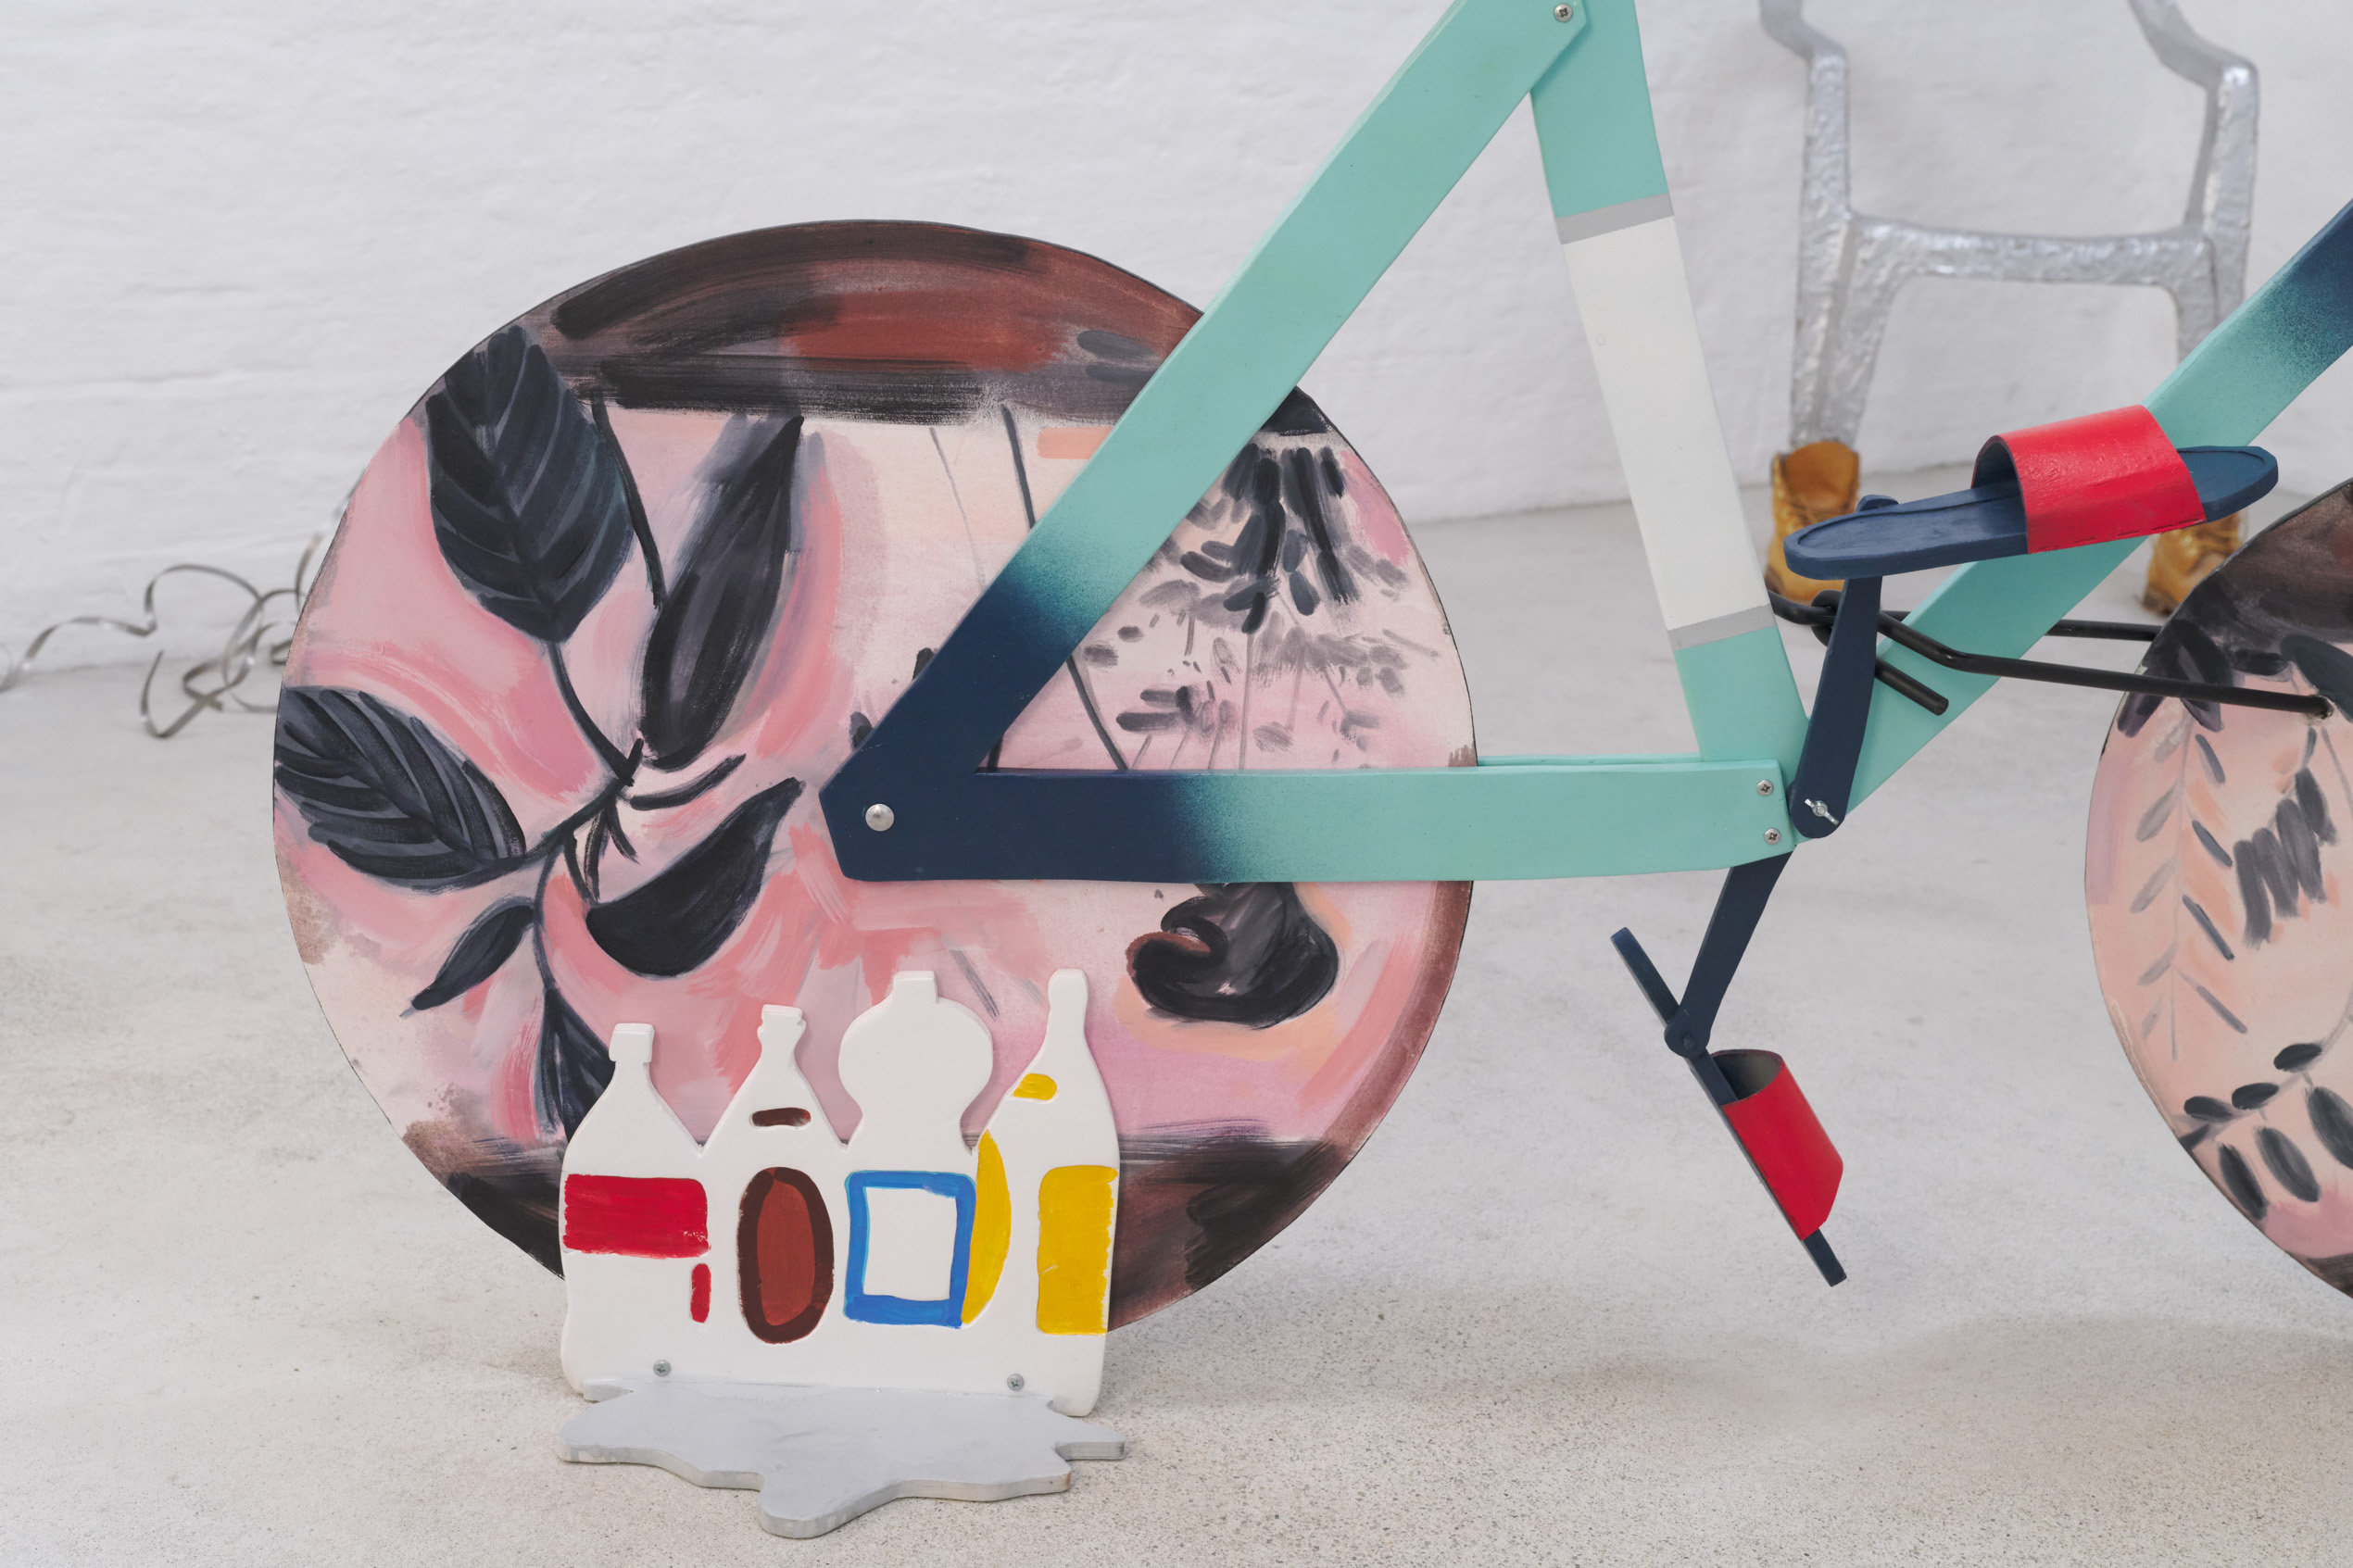 Ellinor Aurora Aasgaard and Elizabeth Ravn, Celeste, 2019, 173 x 60 x 100 cm, wood, oil paint, plastic, canvas, bicycle bell